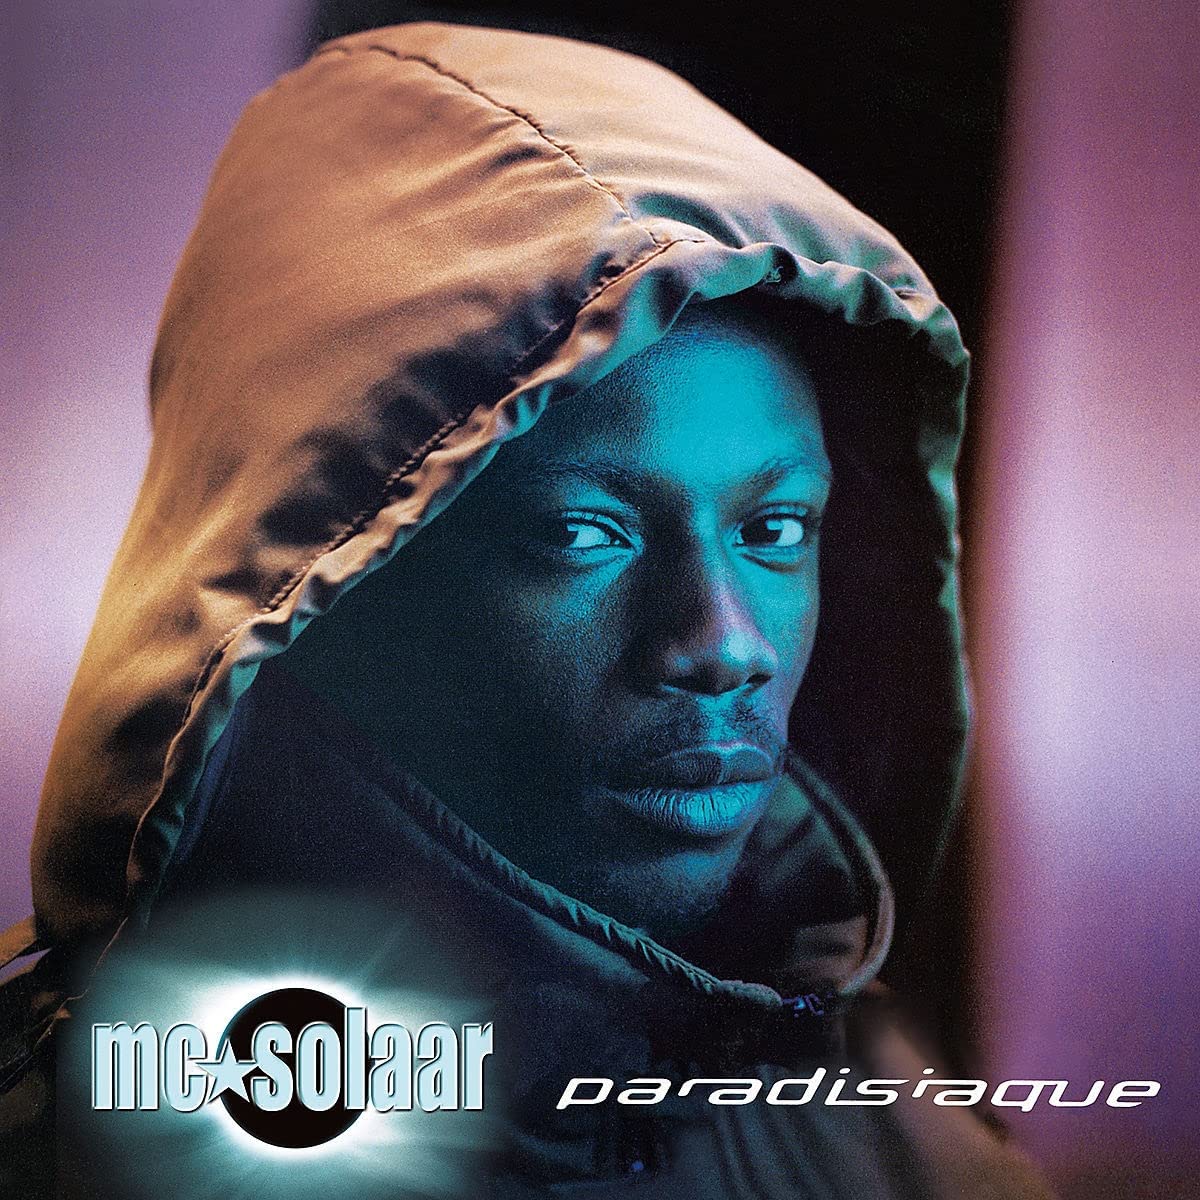 Mc Solaar Paradisiaque / Mc Solaar